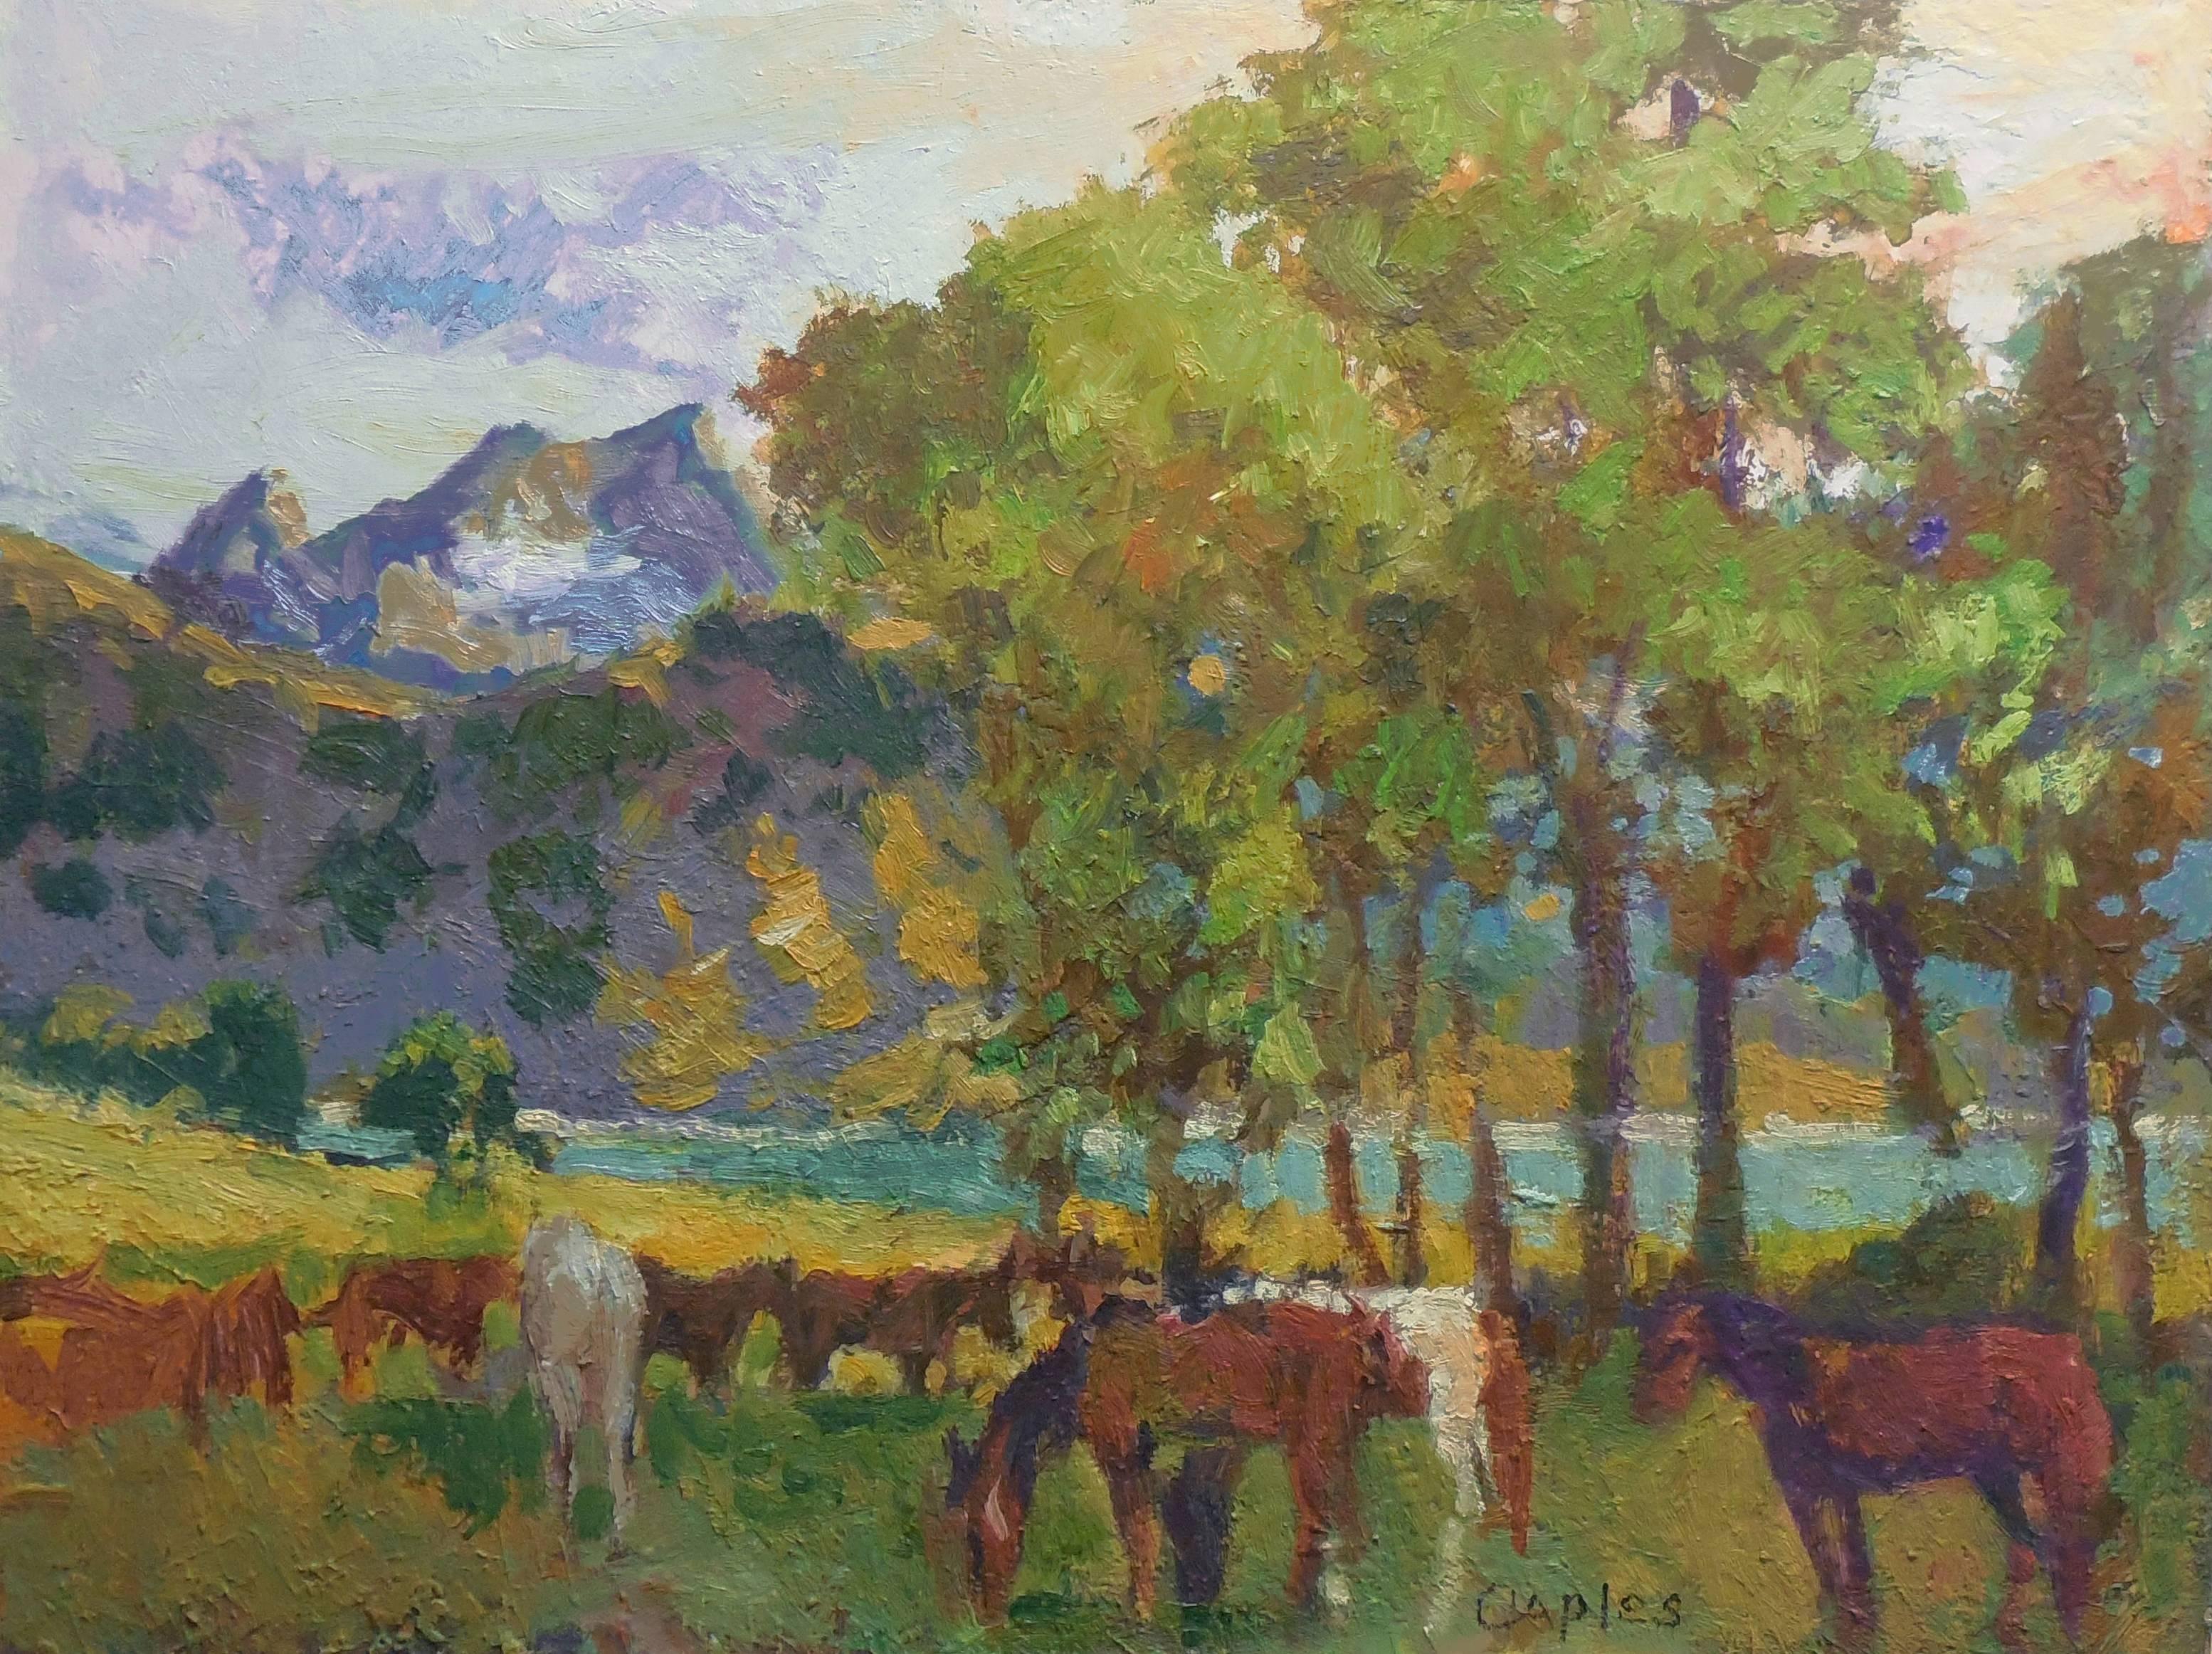 Robert Caples Animal Painting - High Country Pasture